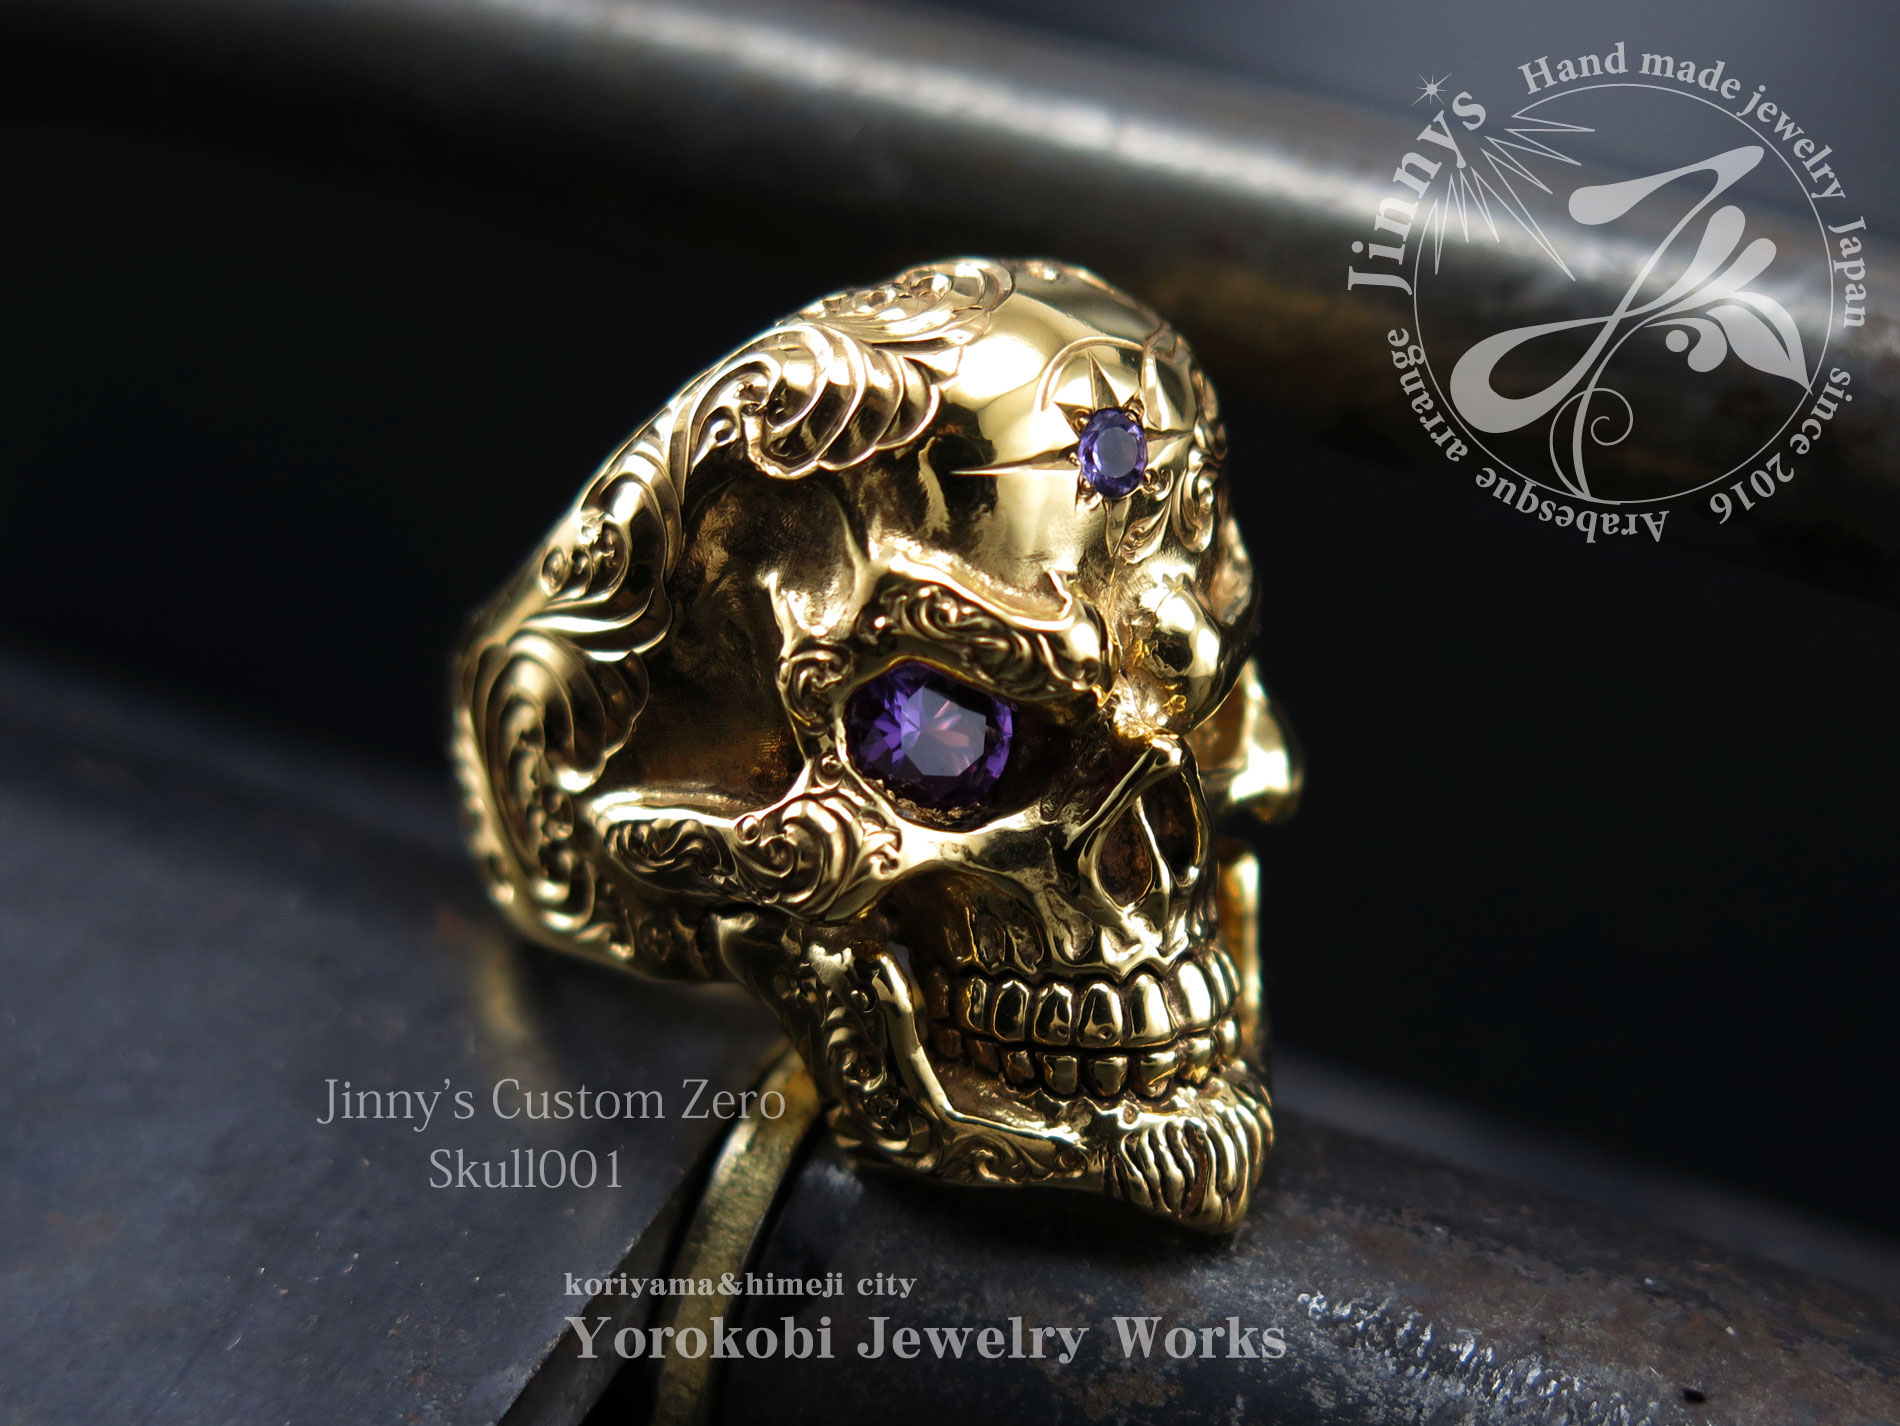 Jinny's Skull ring 001a Custom Zero 18Kゴールドコーティング